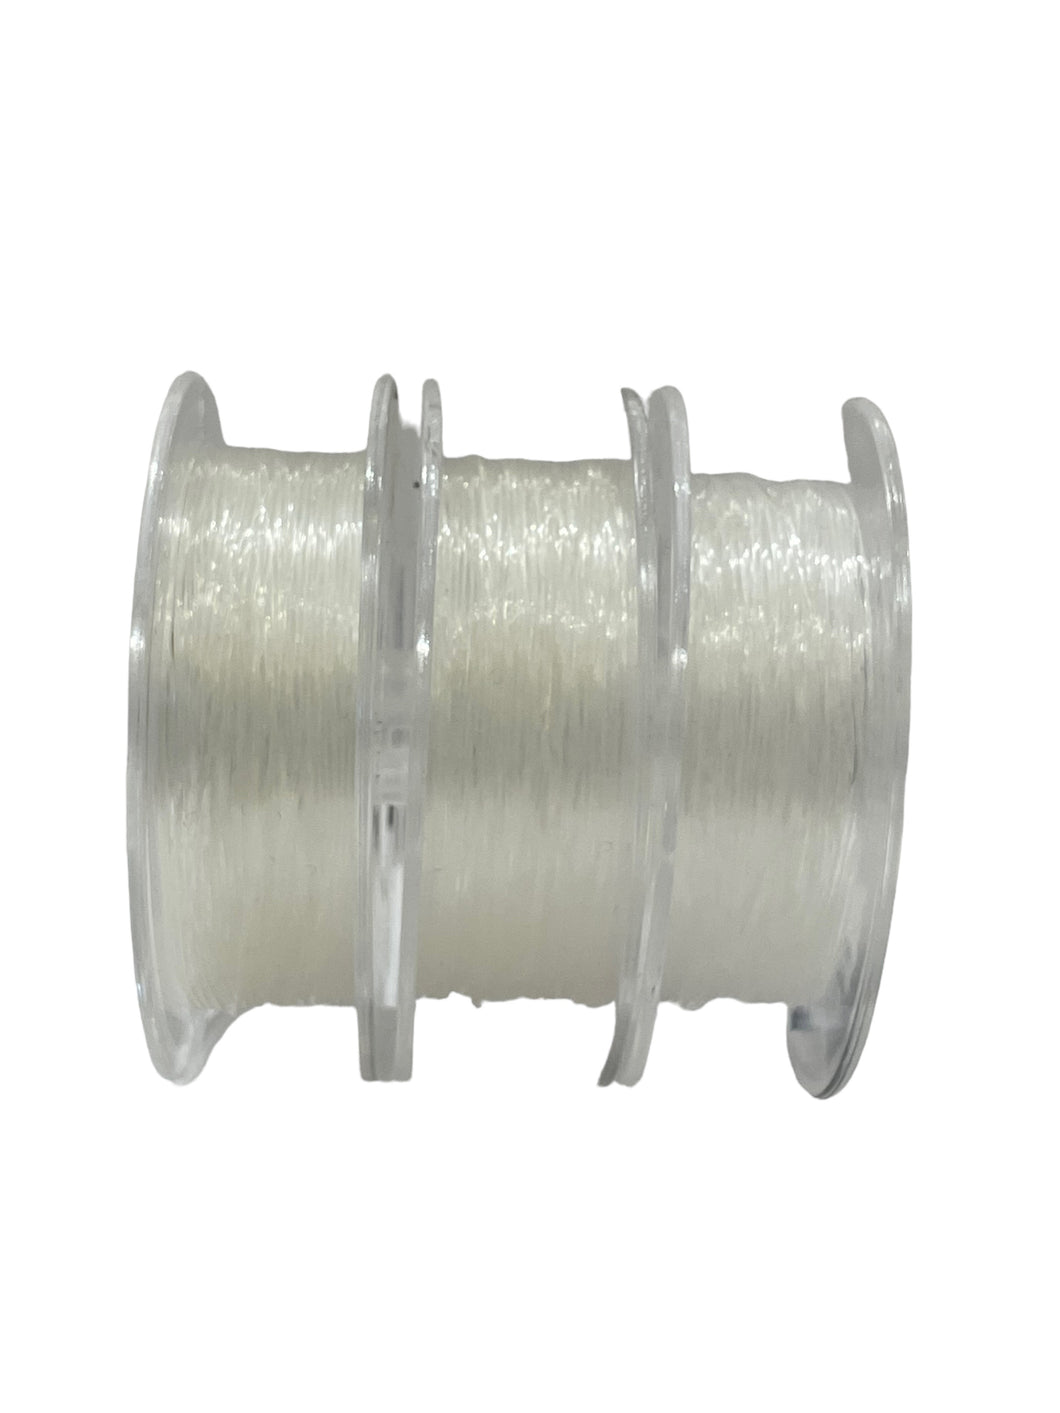 Bobine de fil elastique silicone renforcé 0.3-1mm